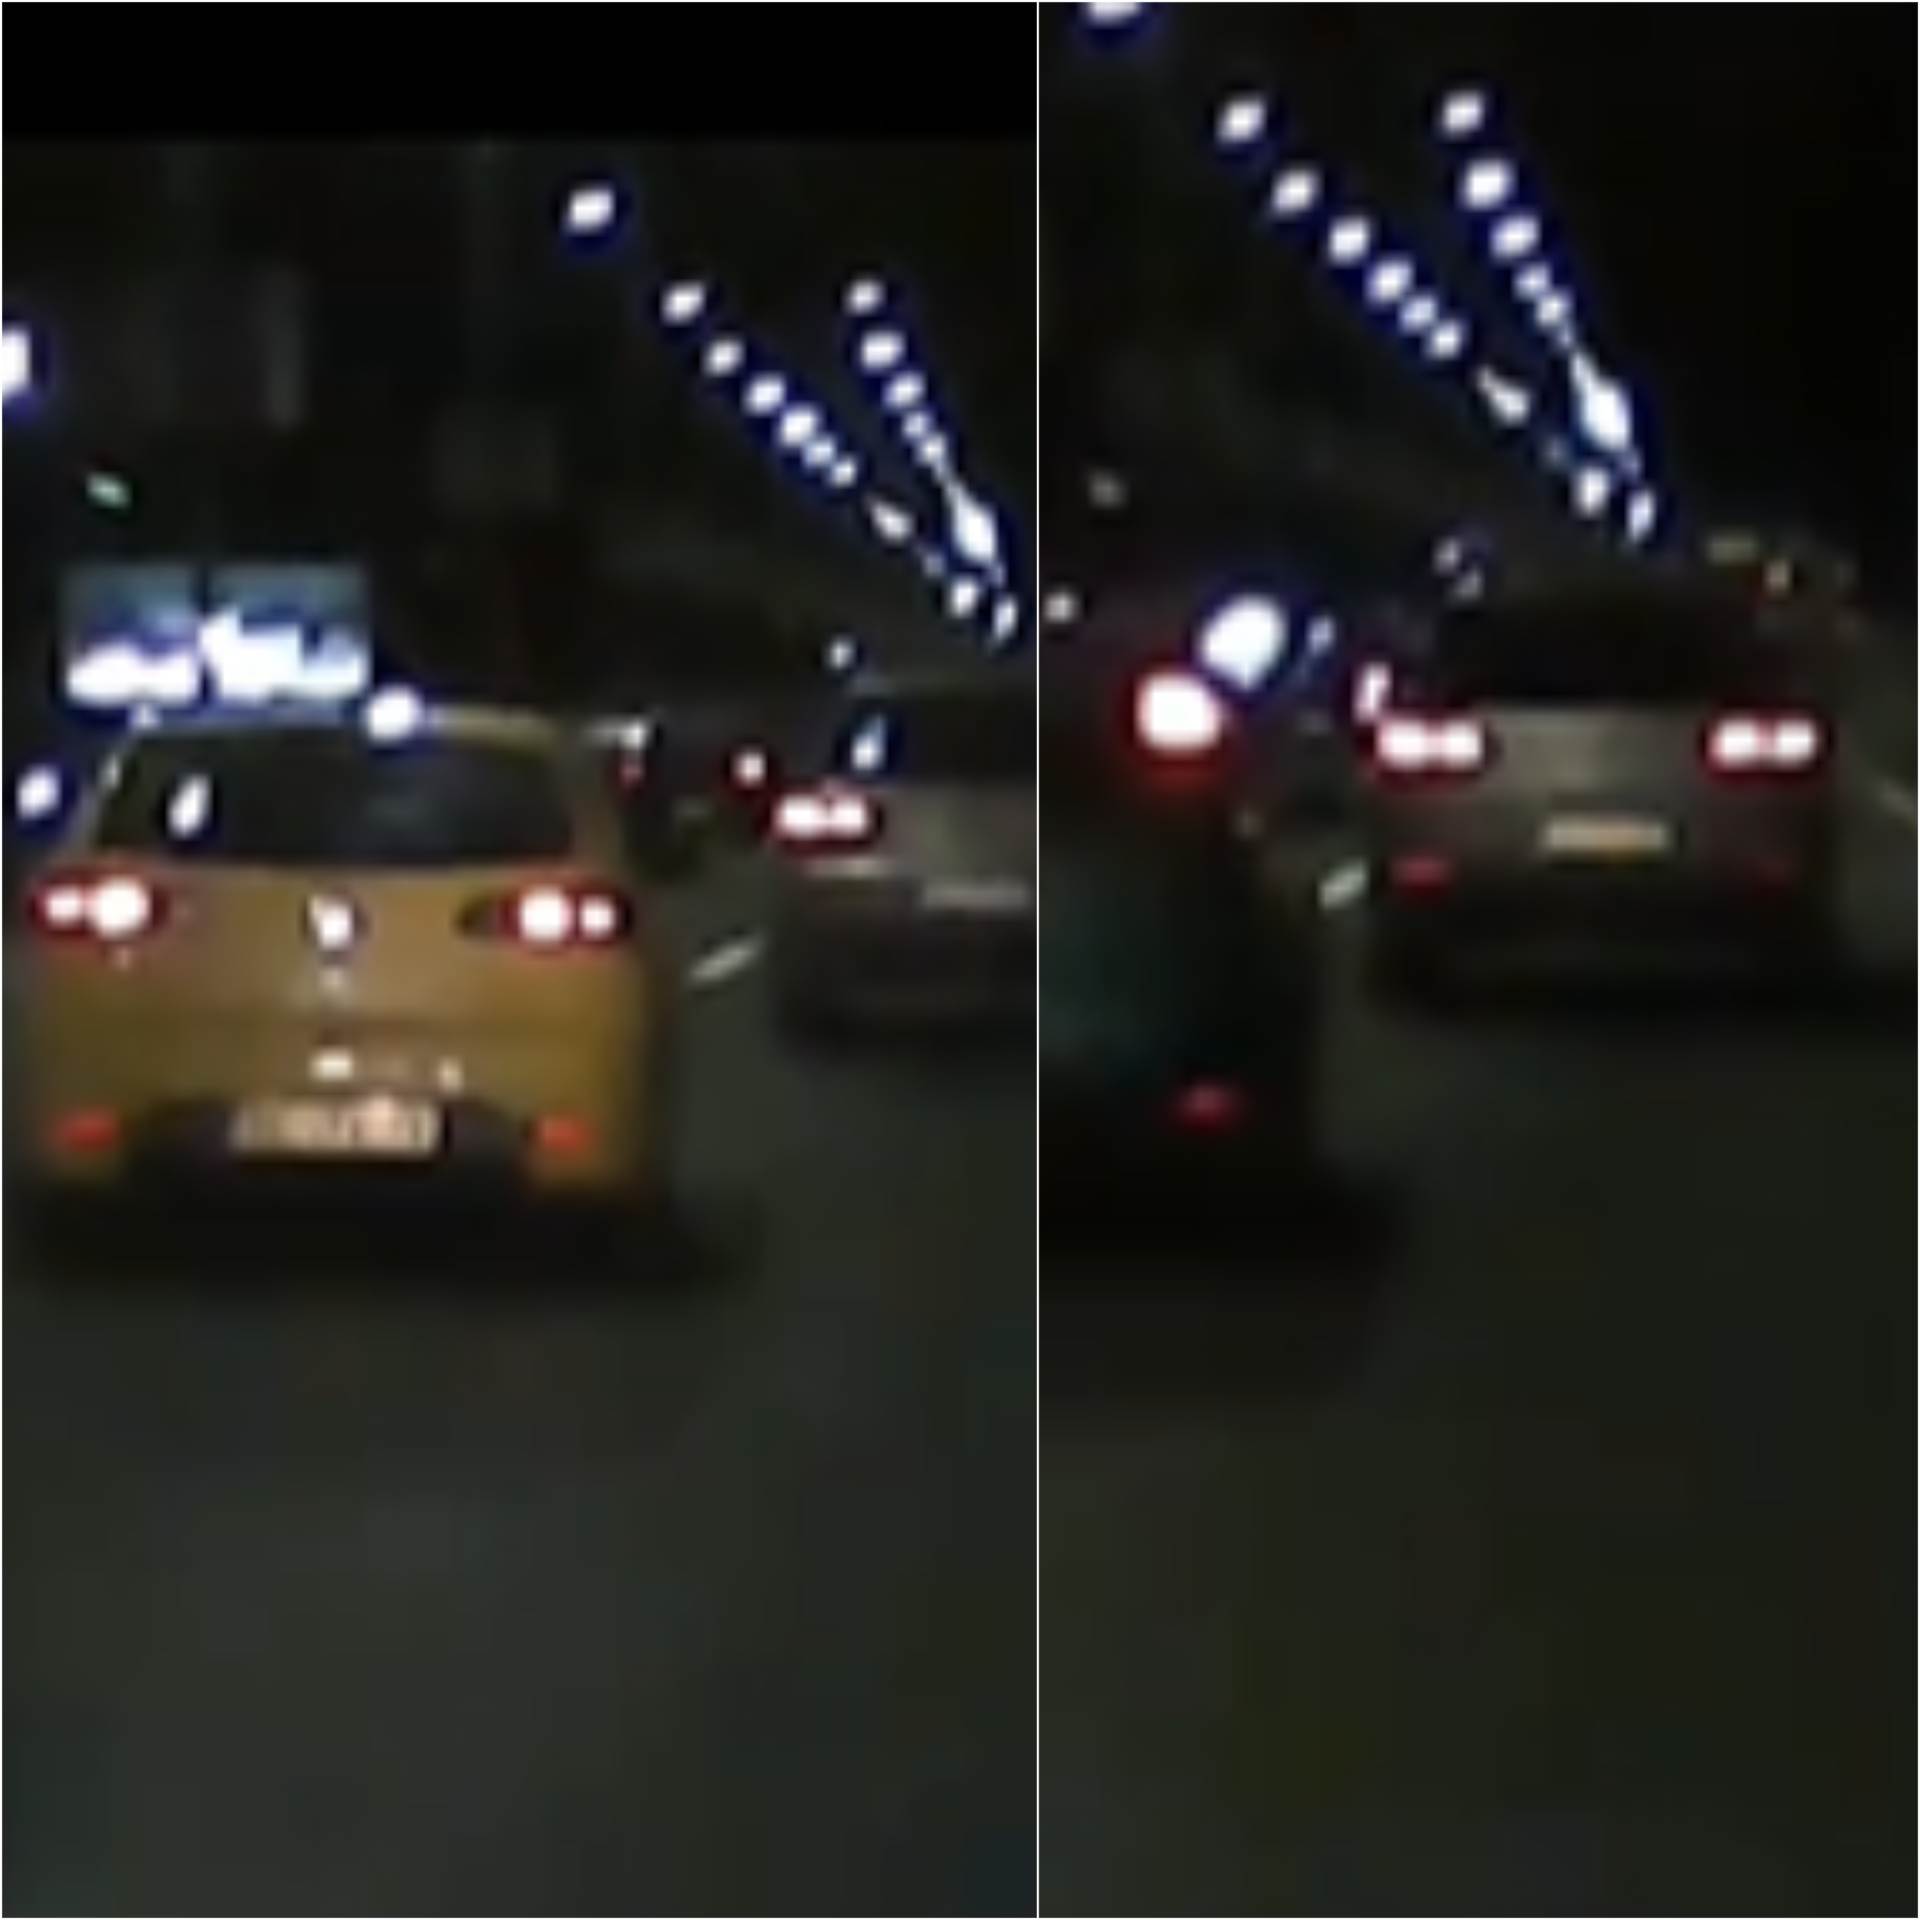  Snimak preticanja na autoputu 